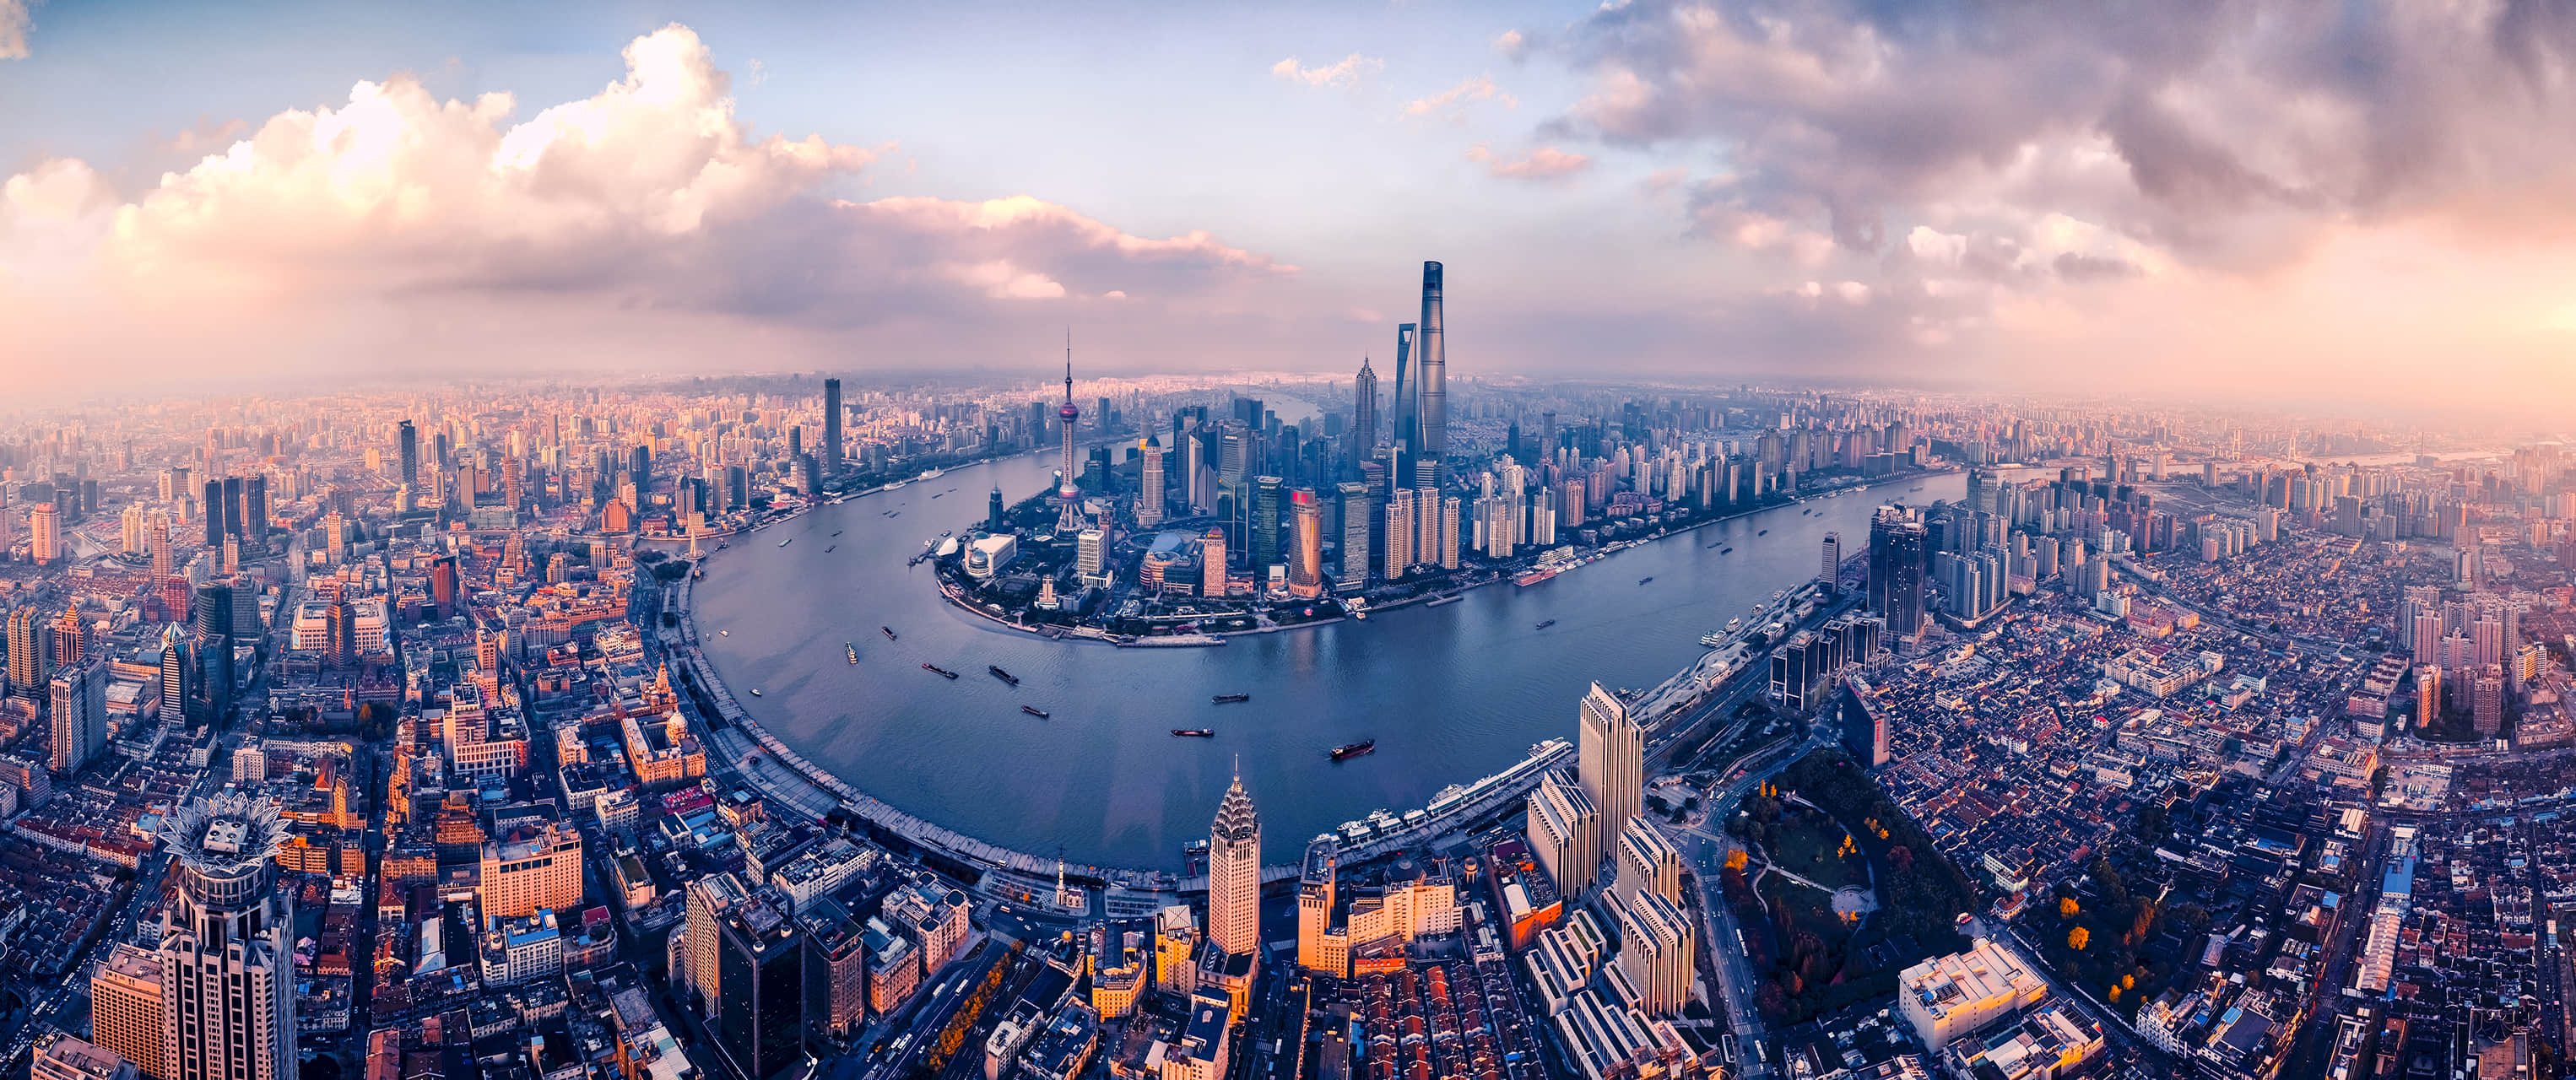 Shanghai Tower 118th Floor Observation Deck Ticket - HyperAir